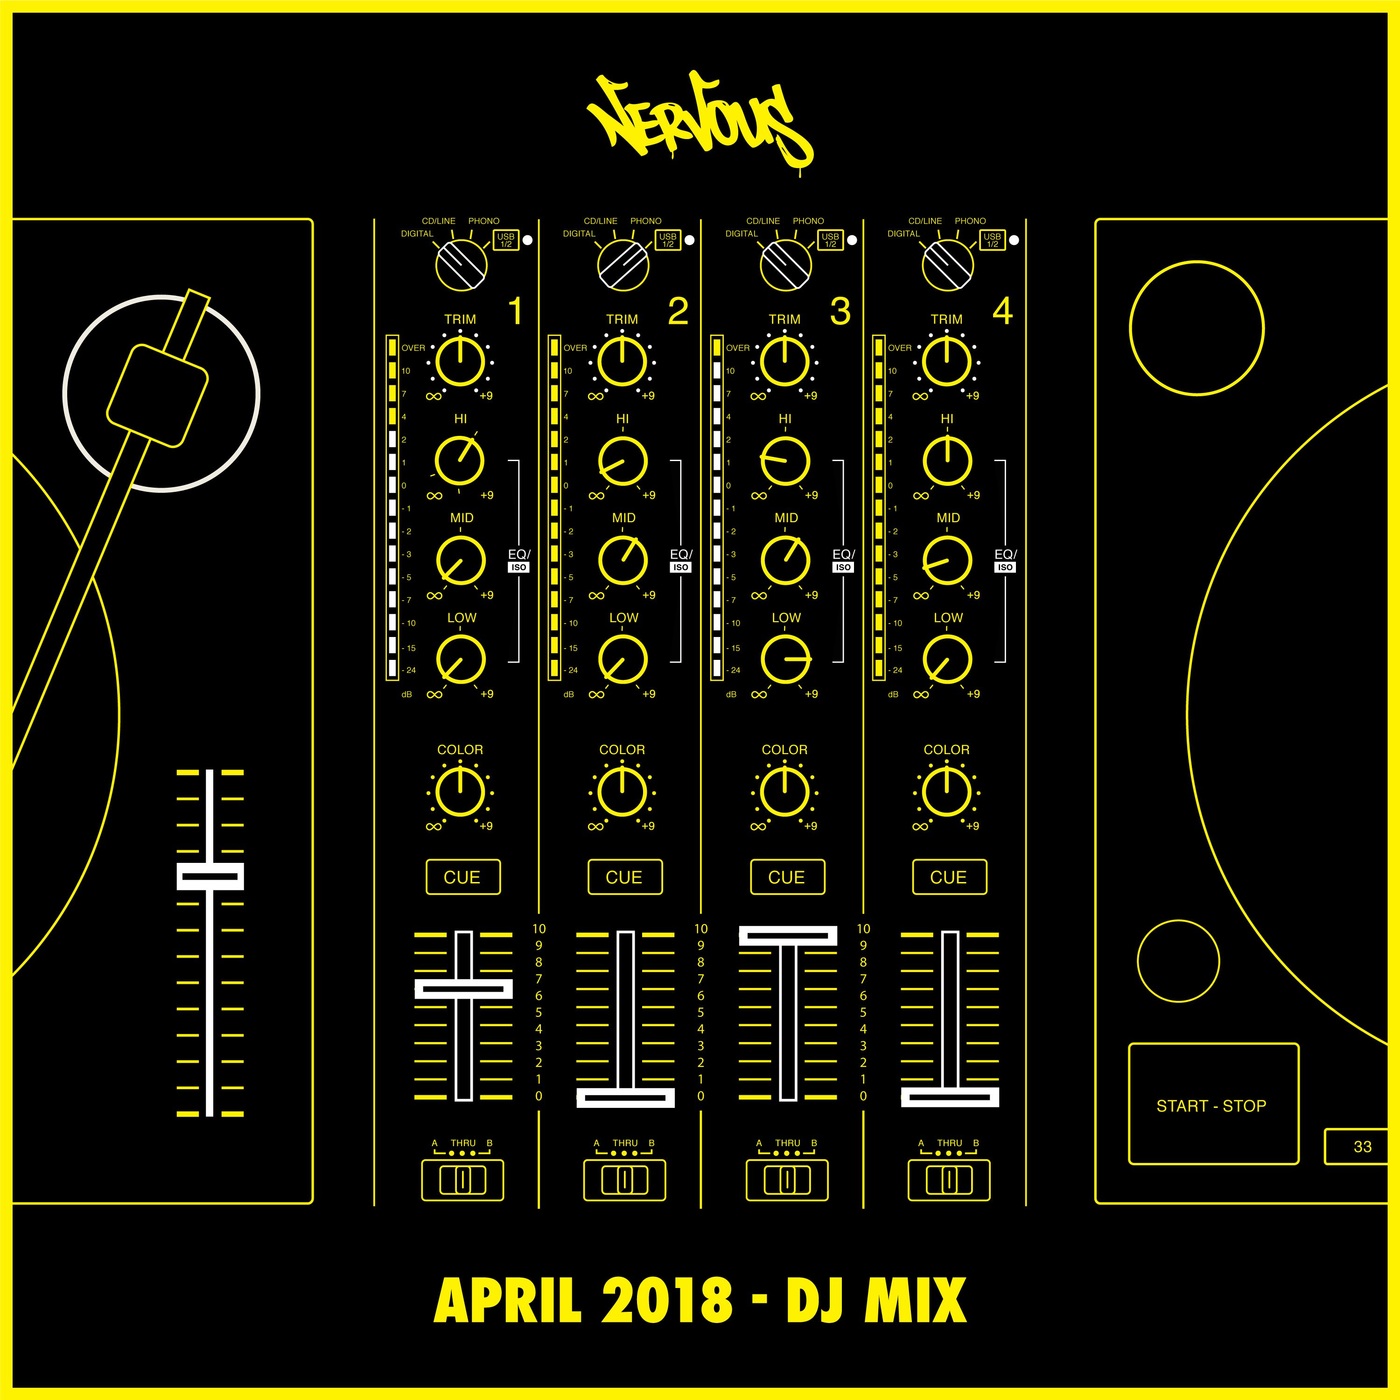 VA - Nervous April 2018 - DJ Mix / Nervous Records